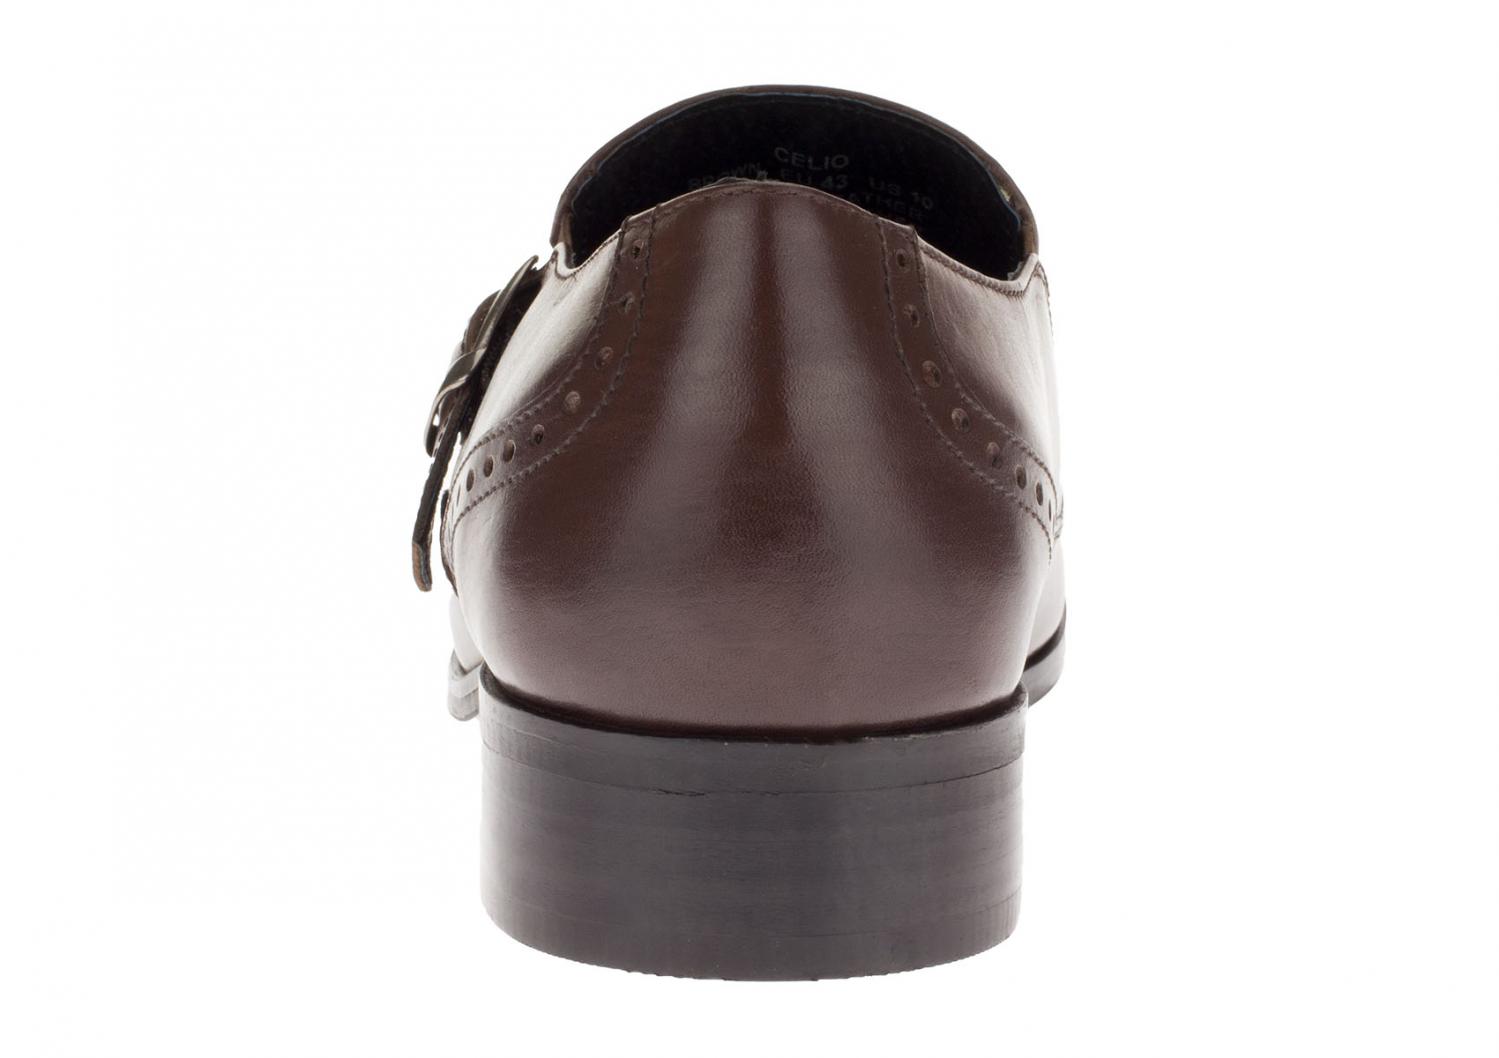 DTI GV Executive Men's Leather Dress Shoe Celio Slip-On Loafer Brown - image 3 of 7